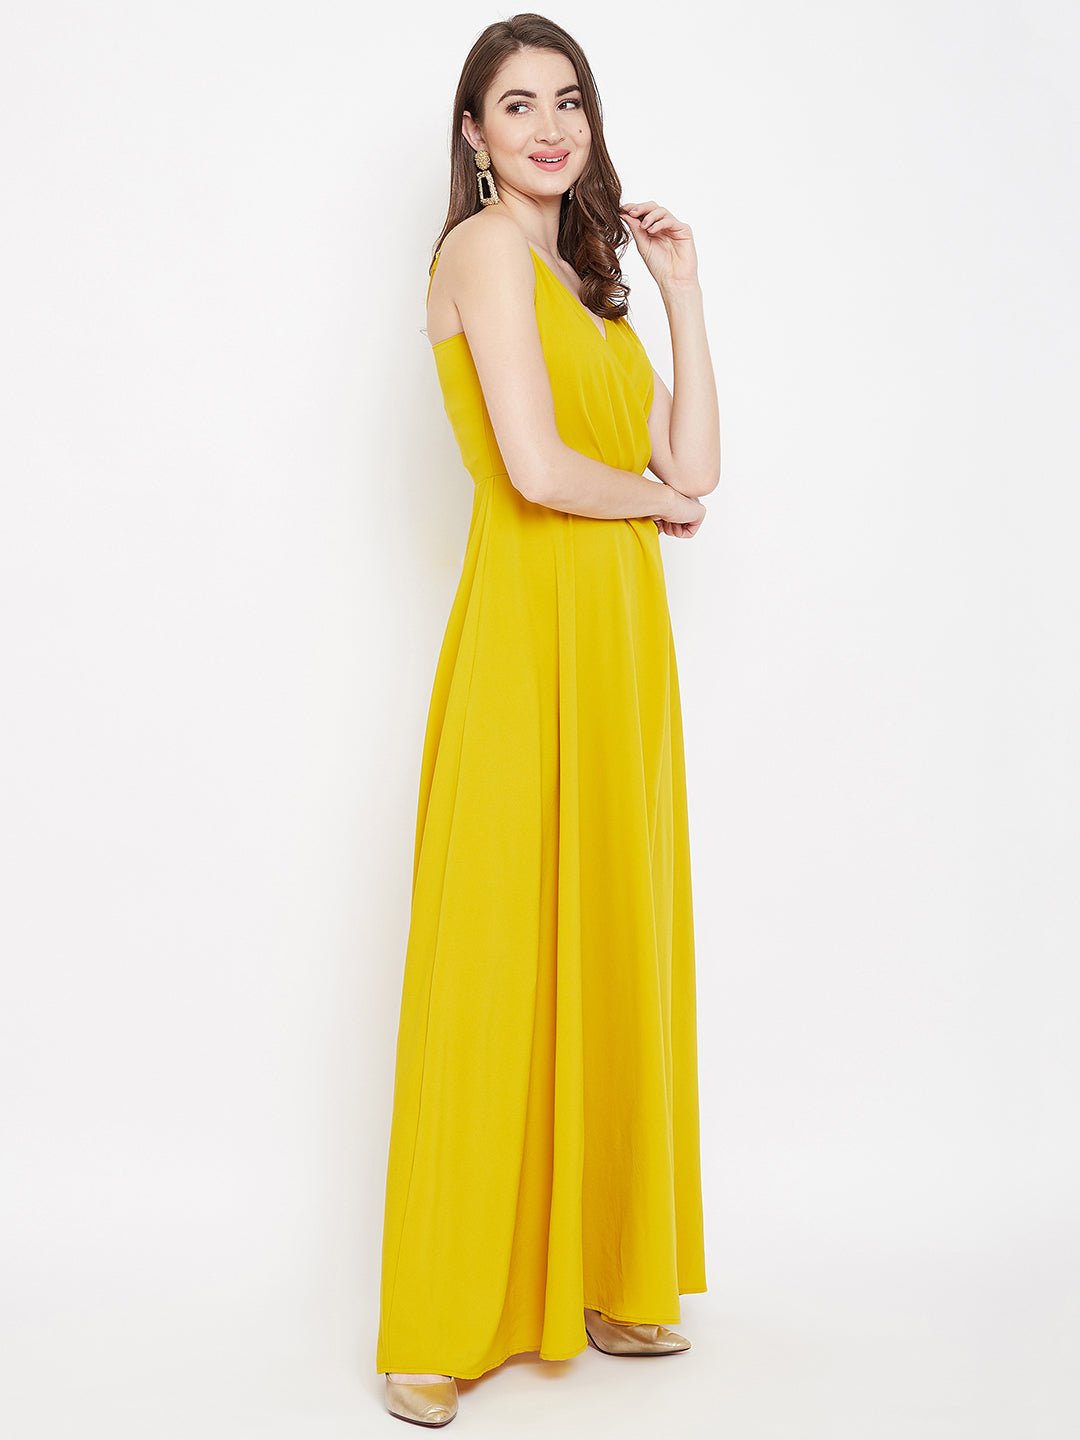 Folk Republic Women Solid Yellow V-Neck Sleeveless Crepe Thigh-High Slit A-Line Maxi Dress - #folk republic#